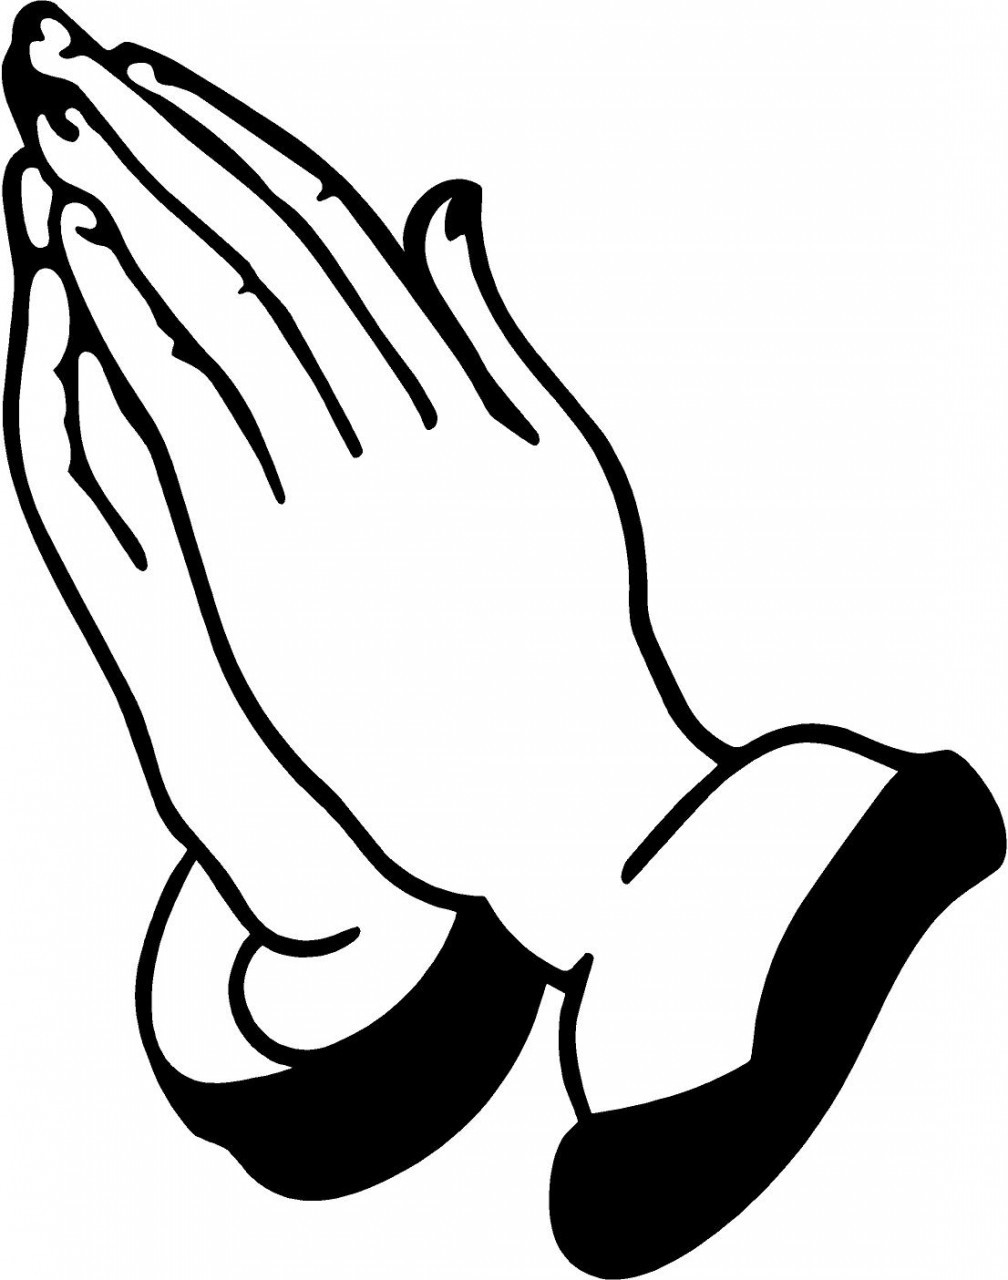 Hands praying clipart